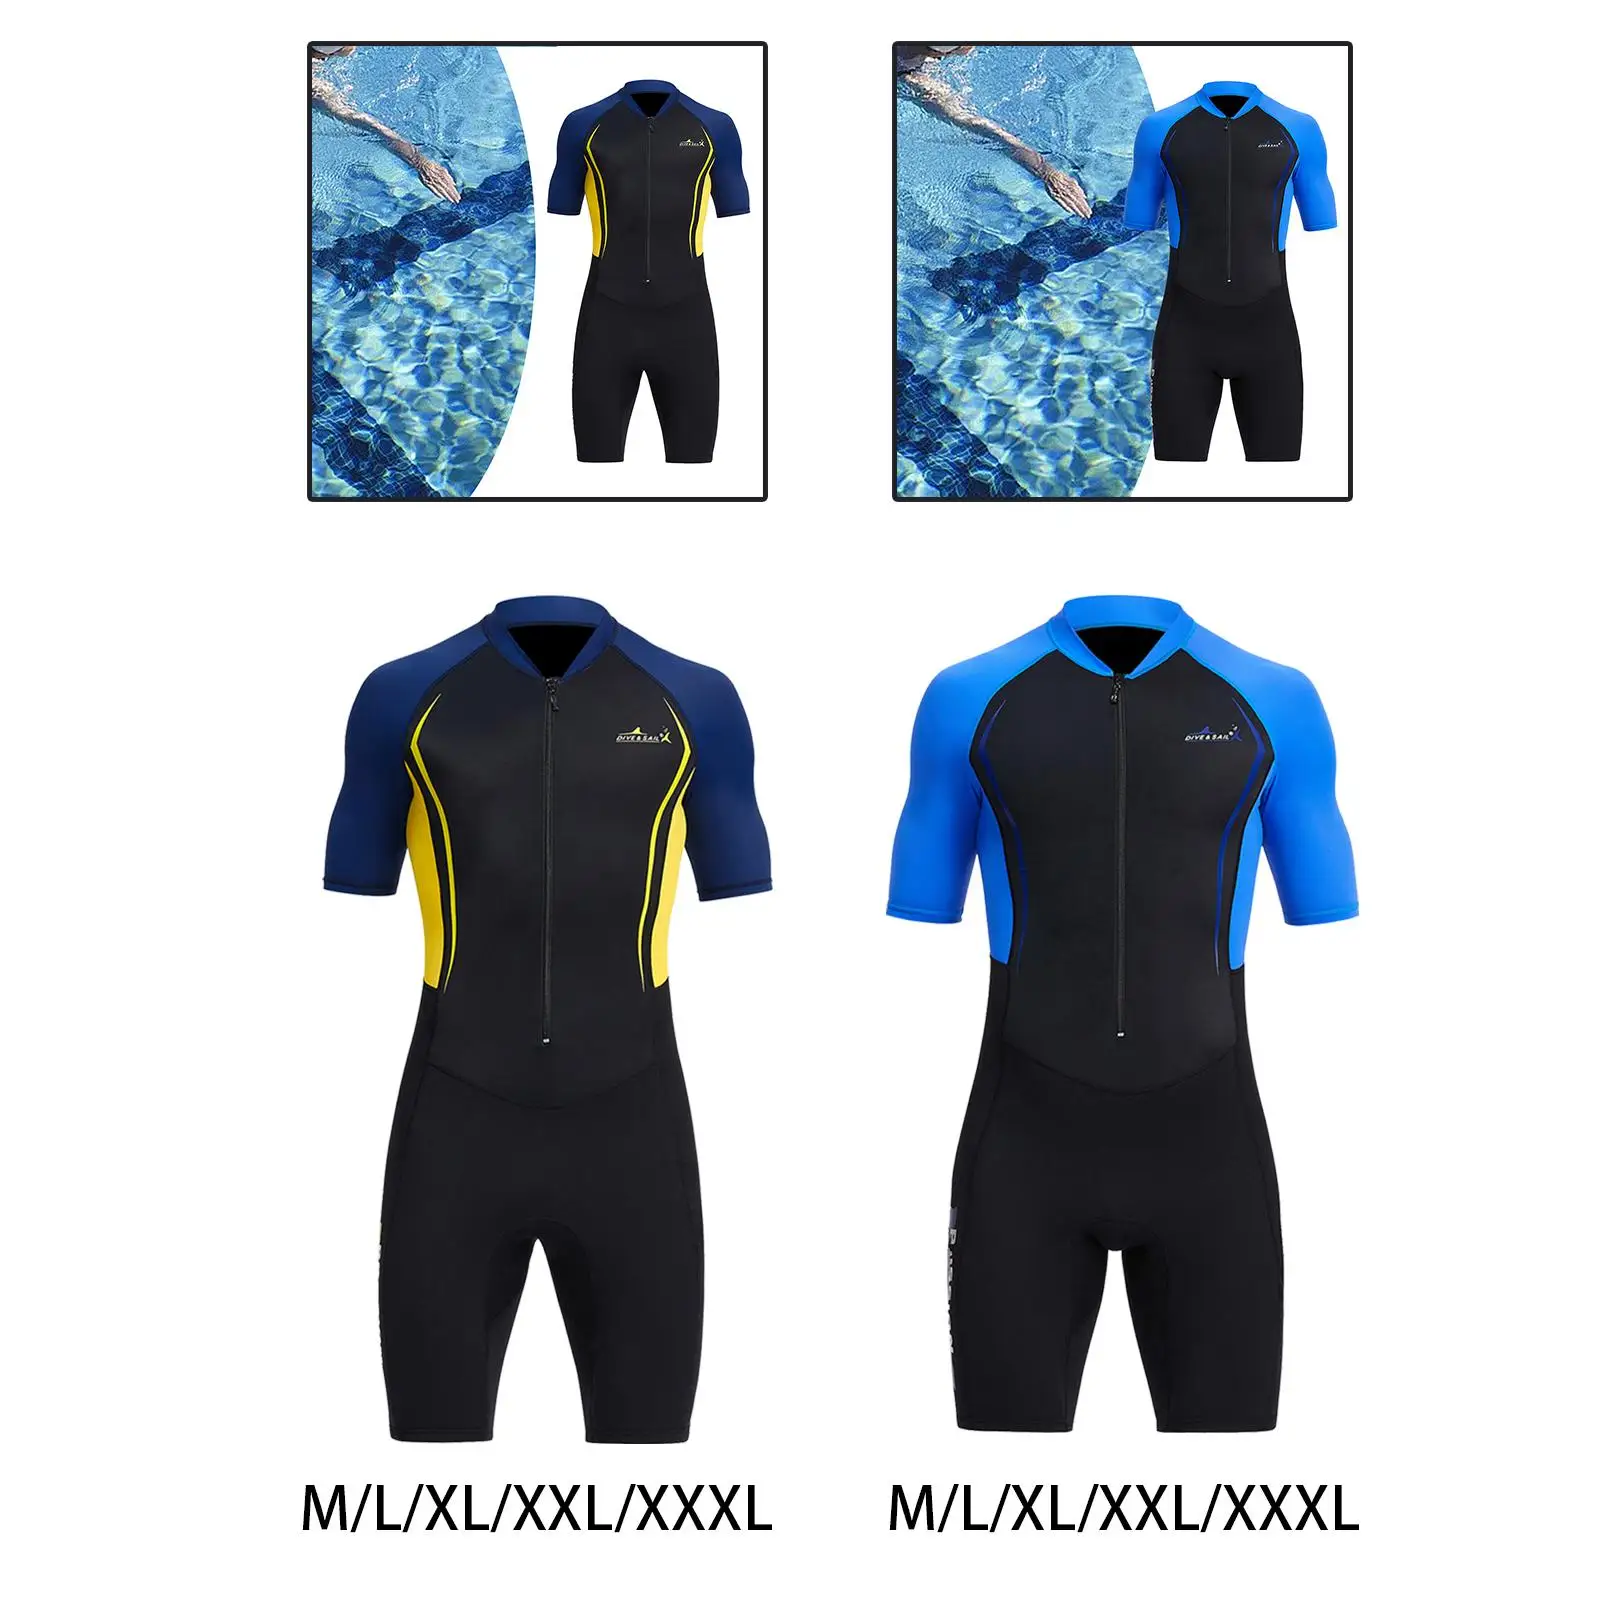 Mens Shorty Wetsuit 1.5mm Neoprene Sunproof One Piece Front Zip Swimsuit Diving Suit for Scuba Diving Surf Swimming Snorkeling